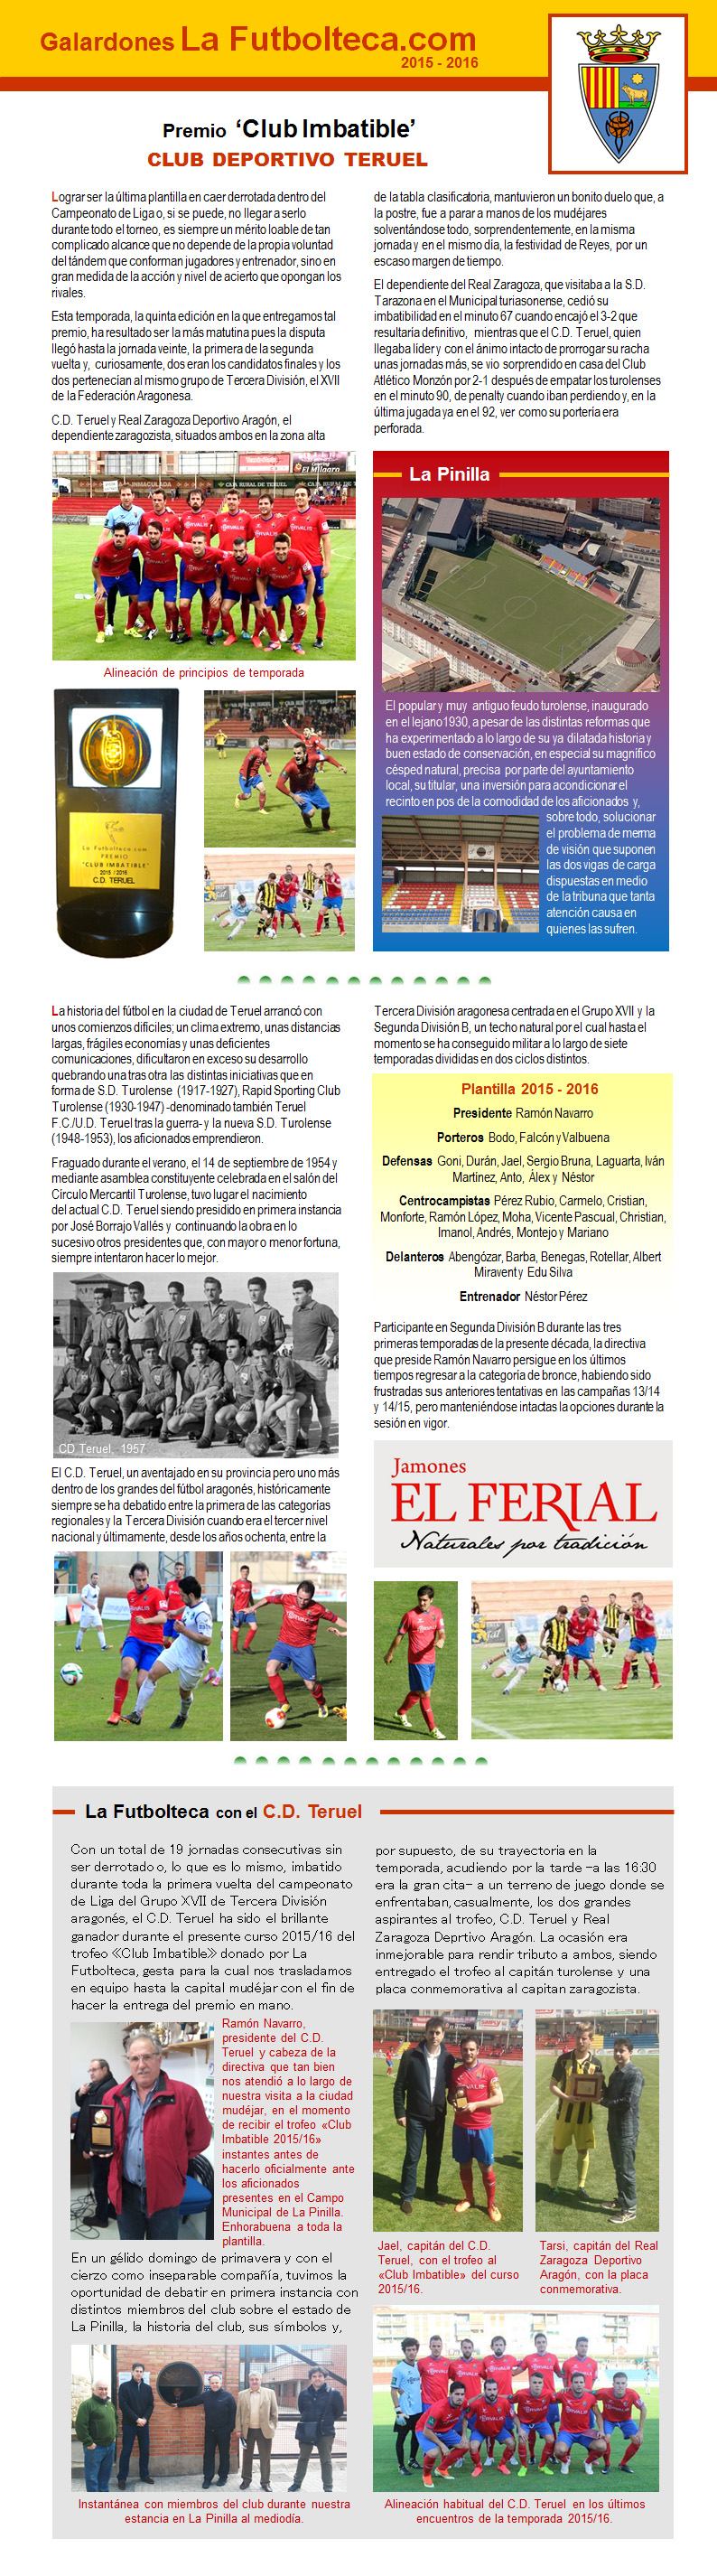 Premio Club Imbatible La Futbolteca 2016